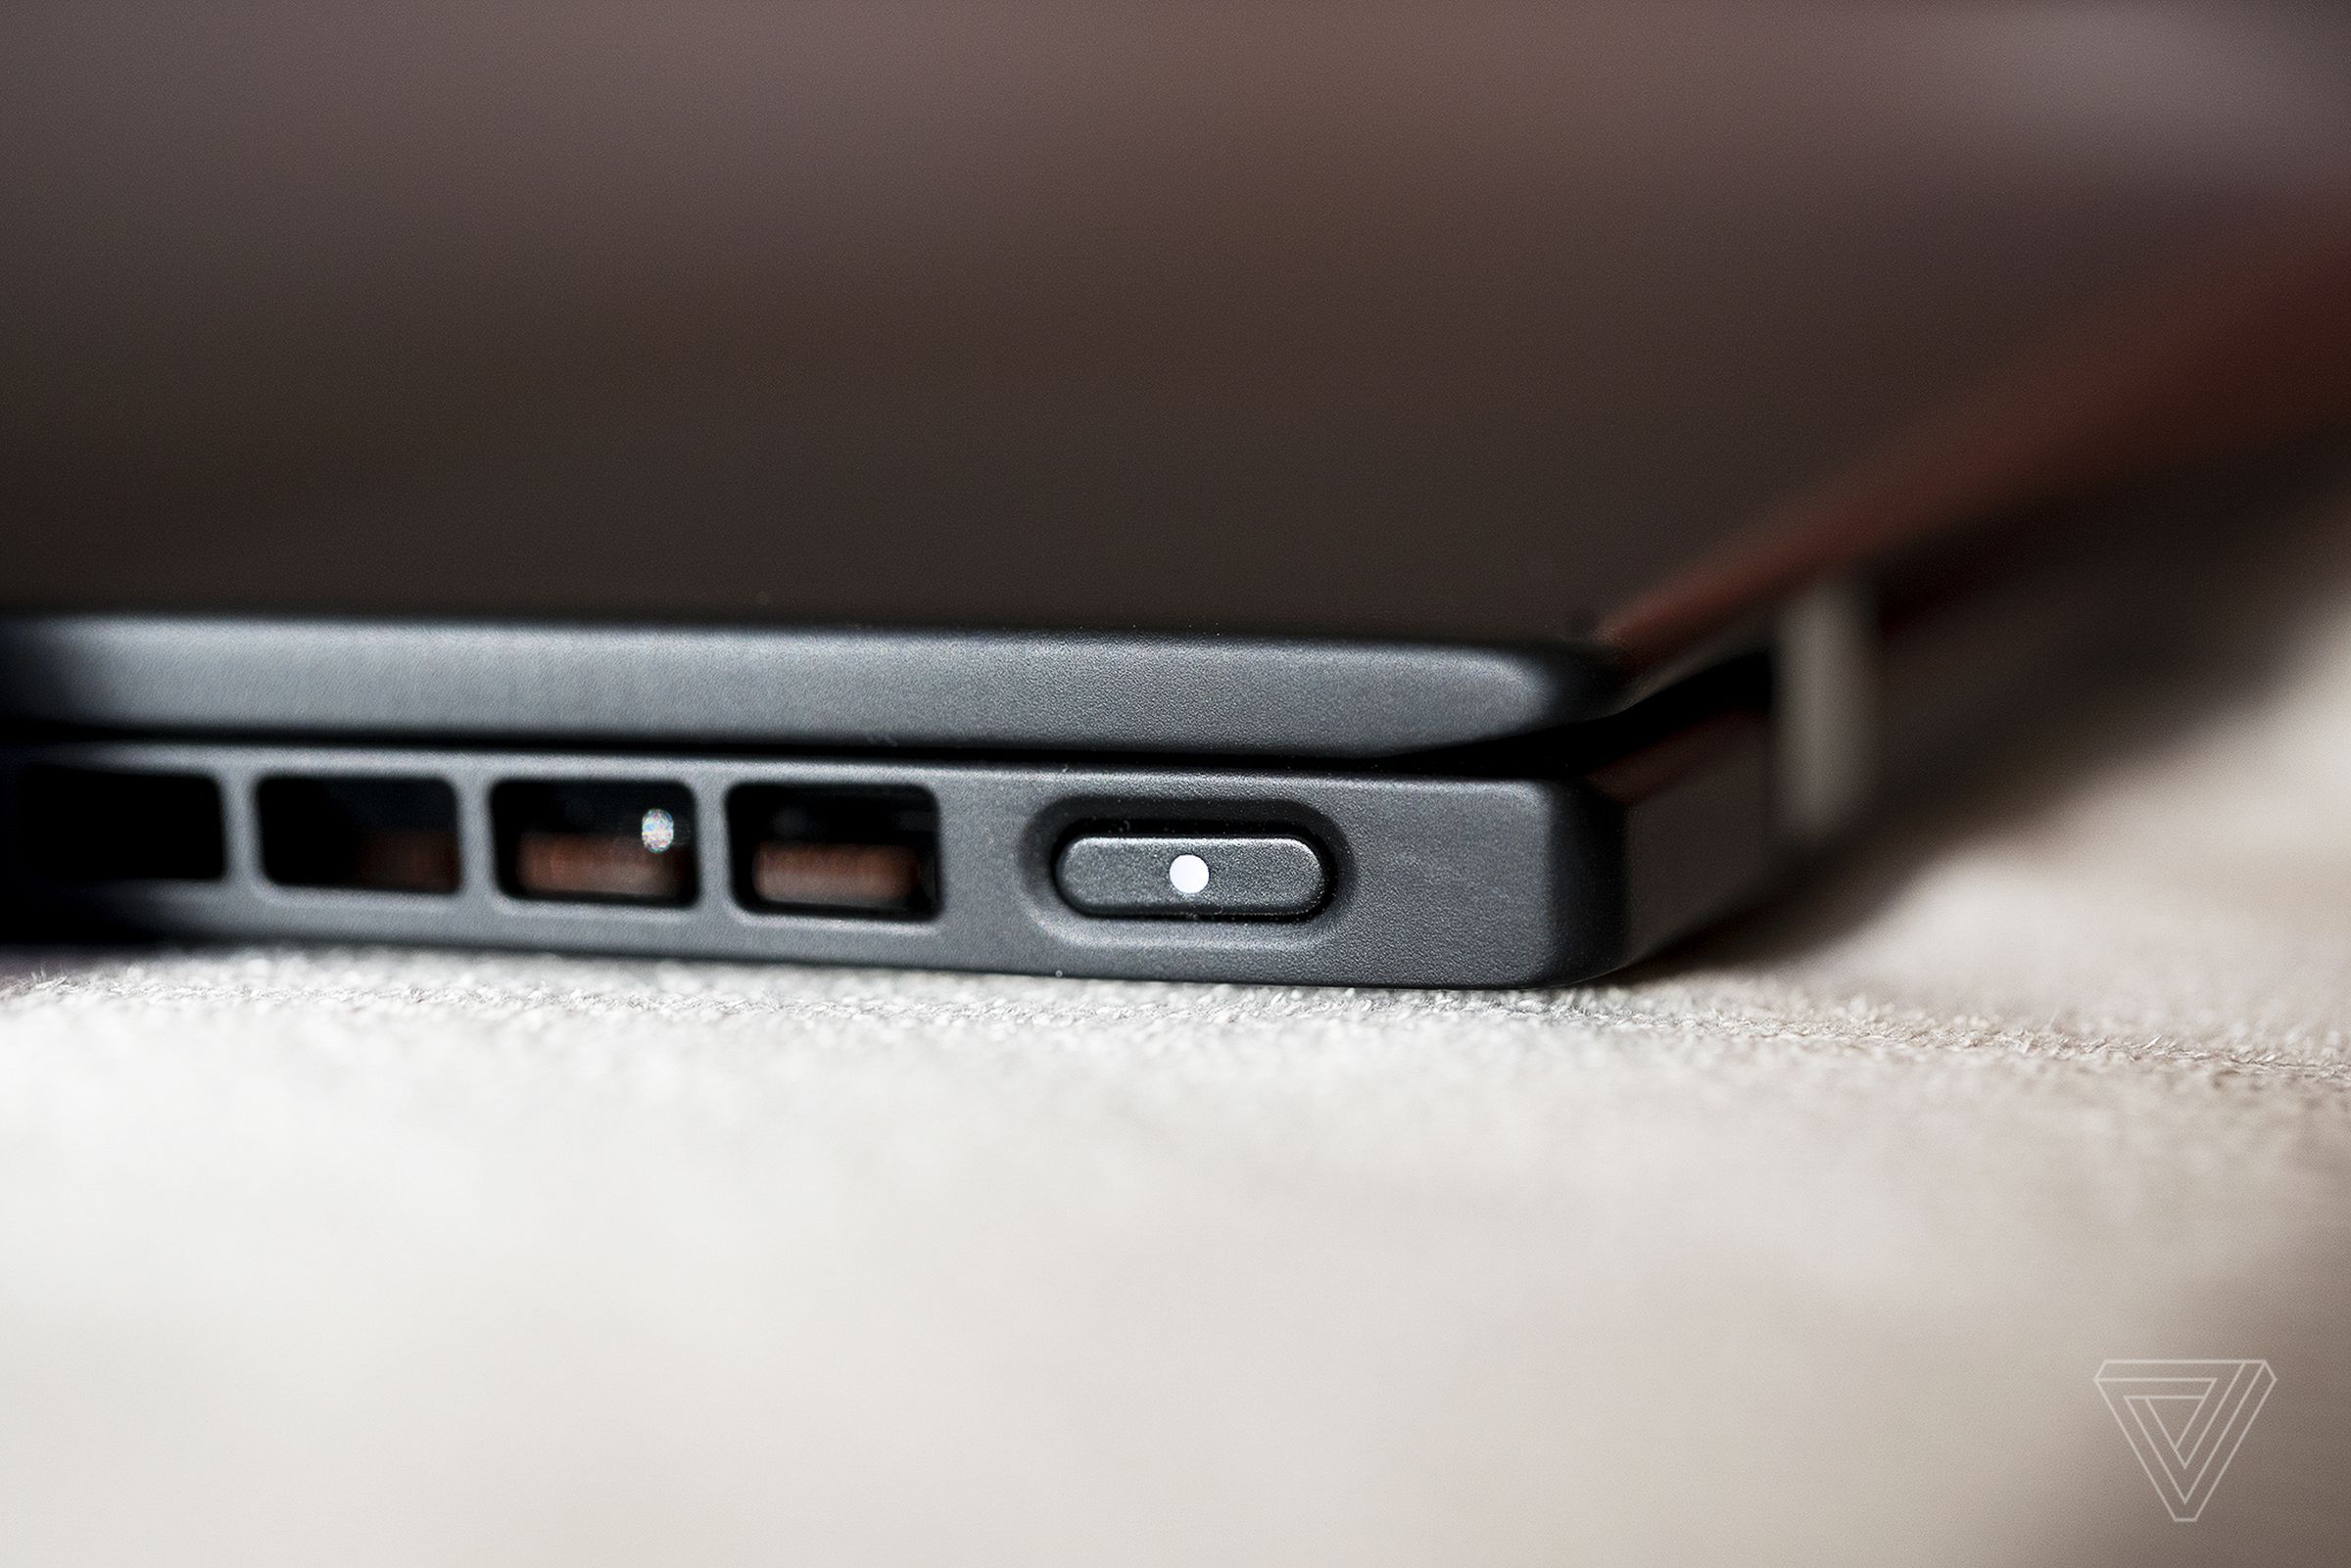 The power button on the ThinkPad X1 Nano.